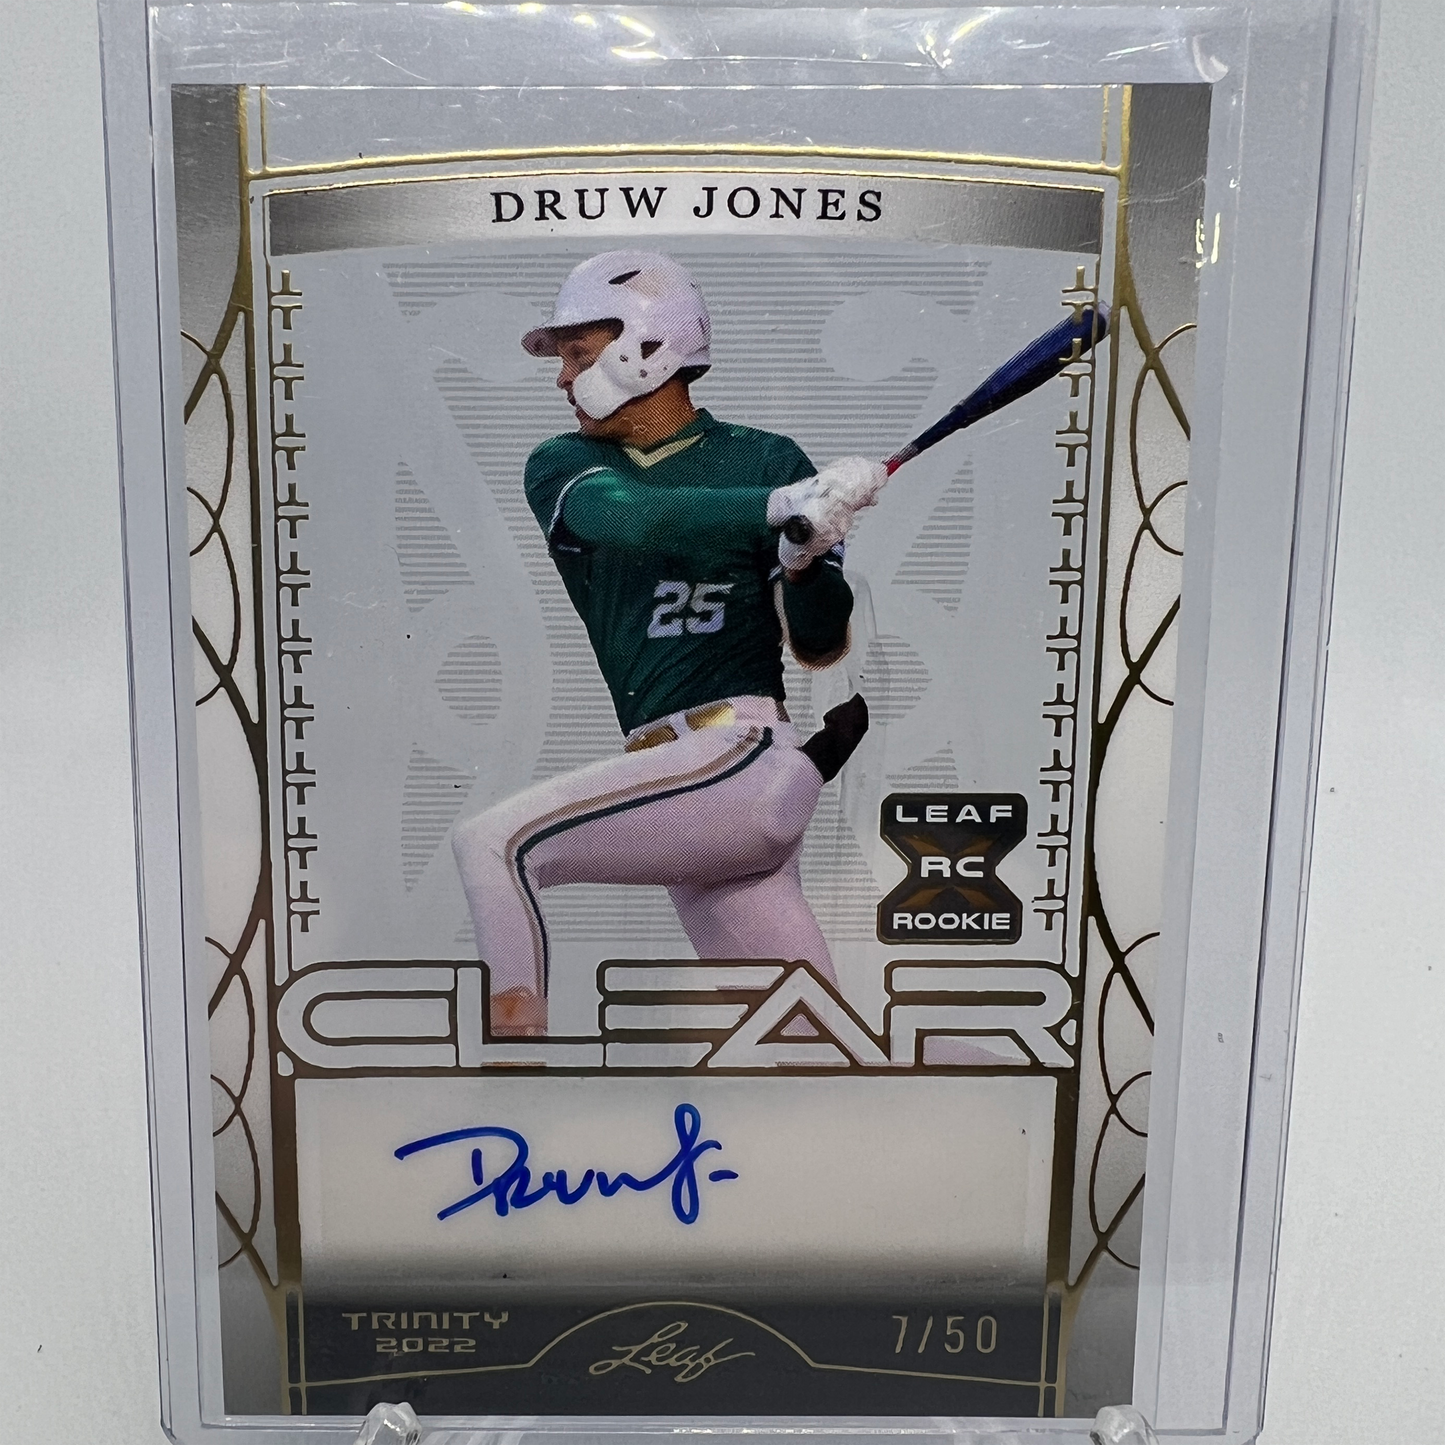 Druw Jones 7/50 Autographed Baseball Card